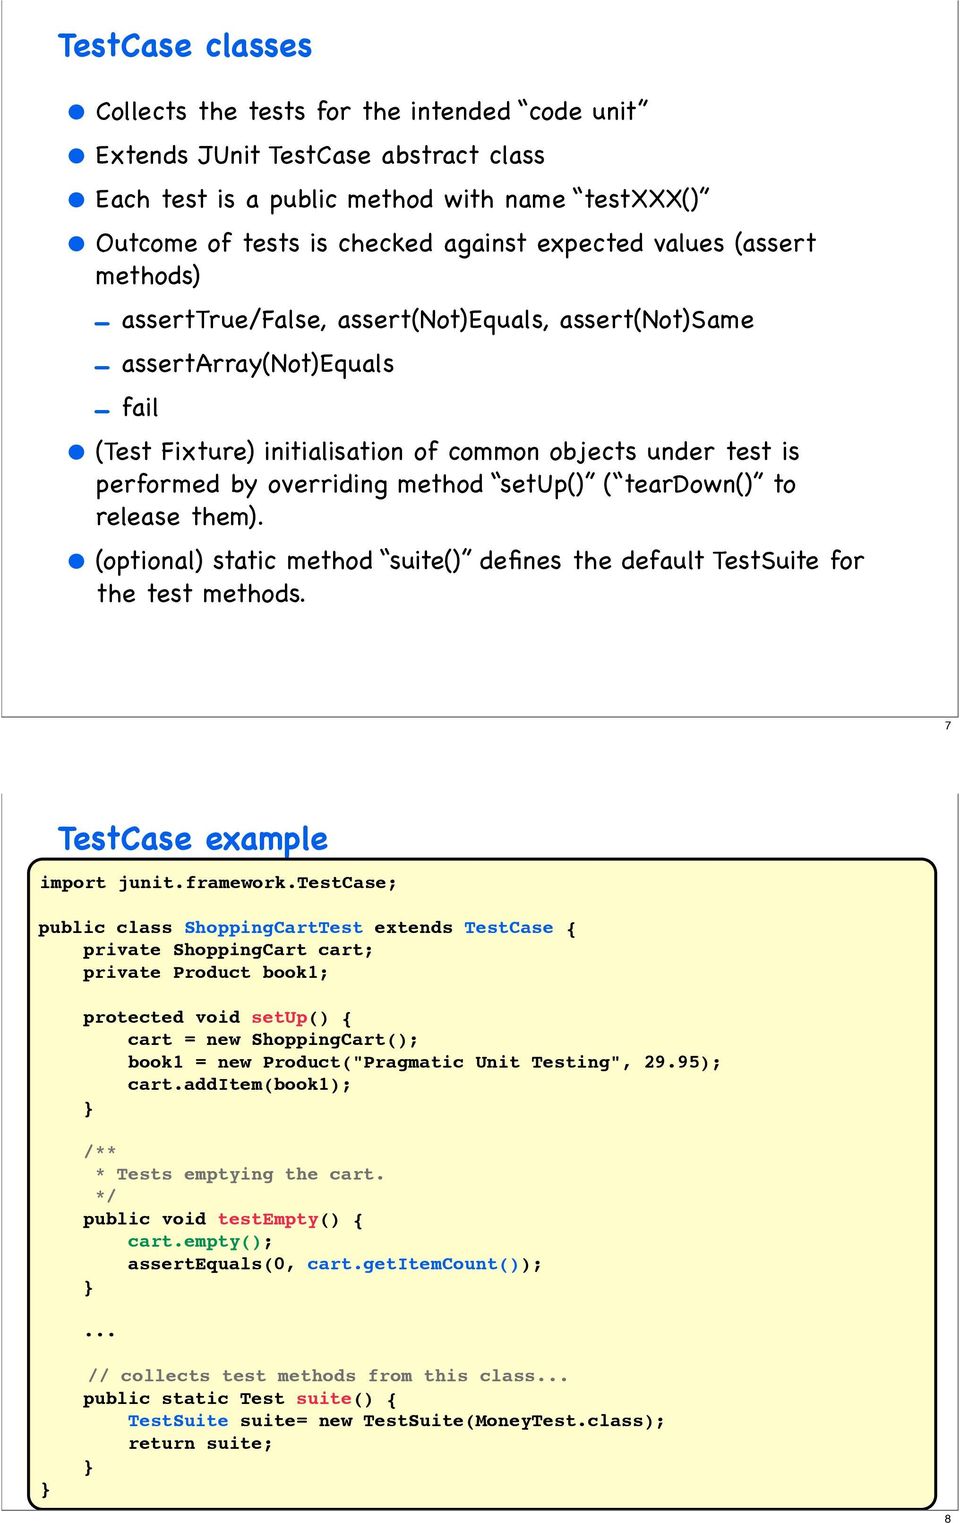 method setup() ( teardown() to release them). (optional) static method suite() defines the default TestSuite for the test methods. 7 TestCase example import junit.framework.